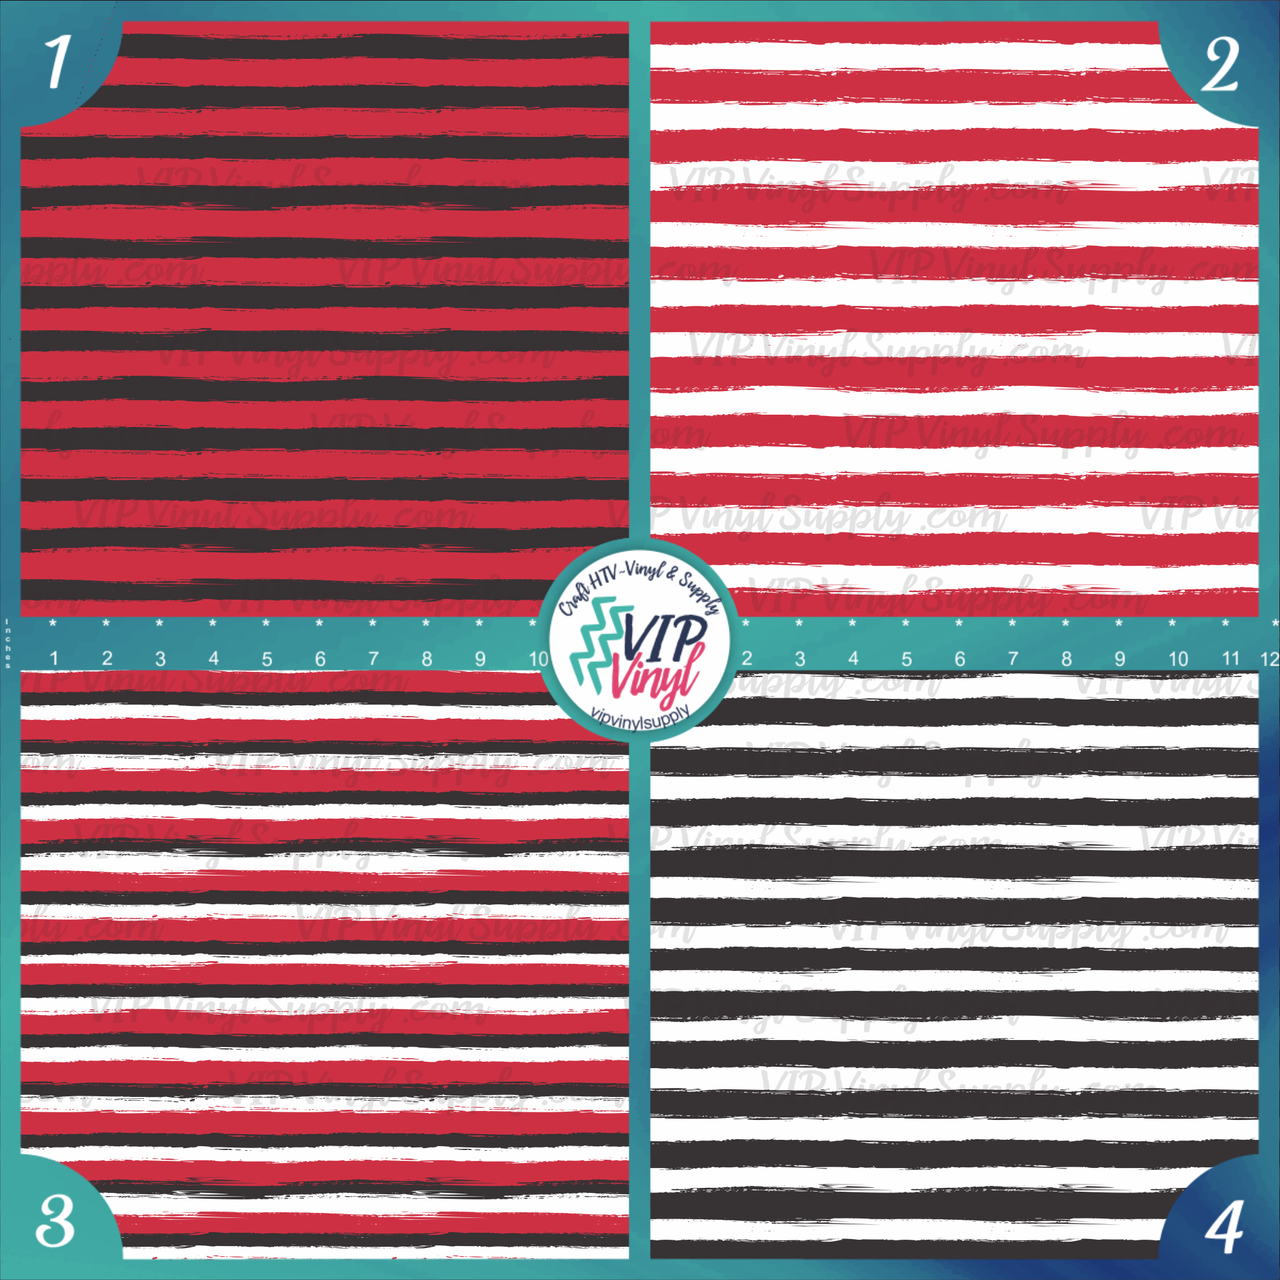 Paint Stripe Patterned Vinyl or HTV - Black, Red & White, Outdoor Adhesive  Vinyl or Heat Transfer Vinyl